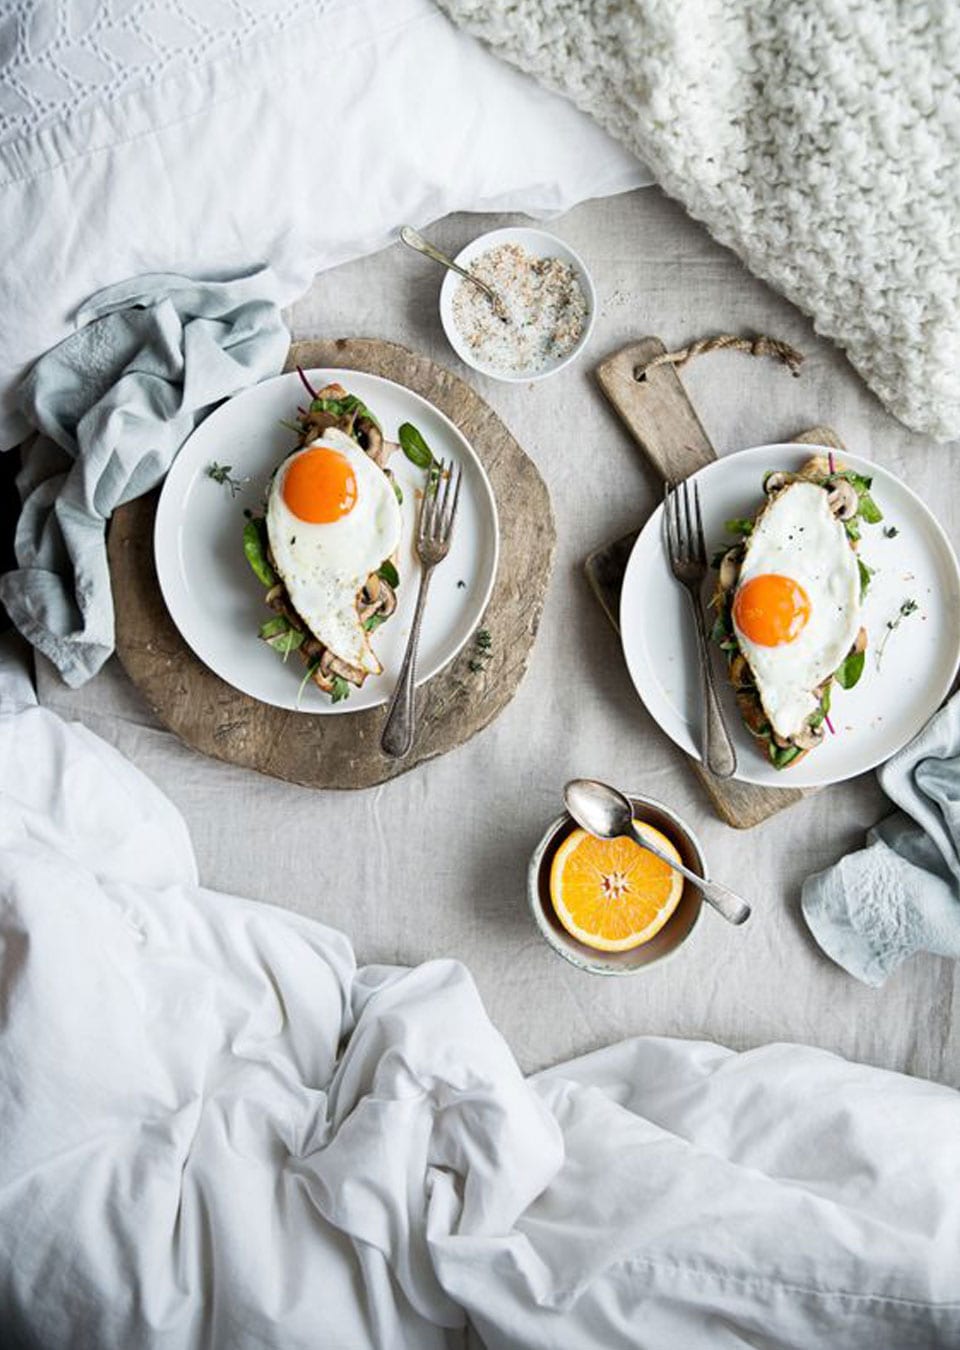 Breakfast in Bed Recipes We're Loving